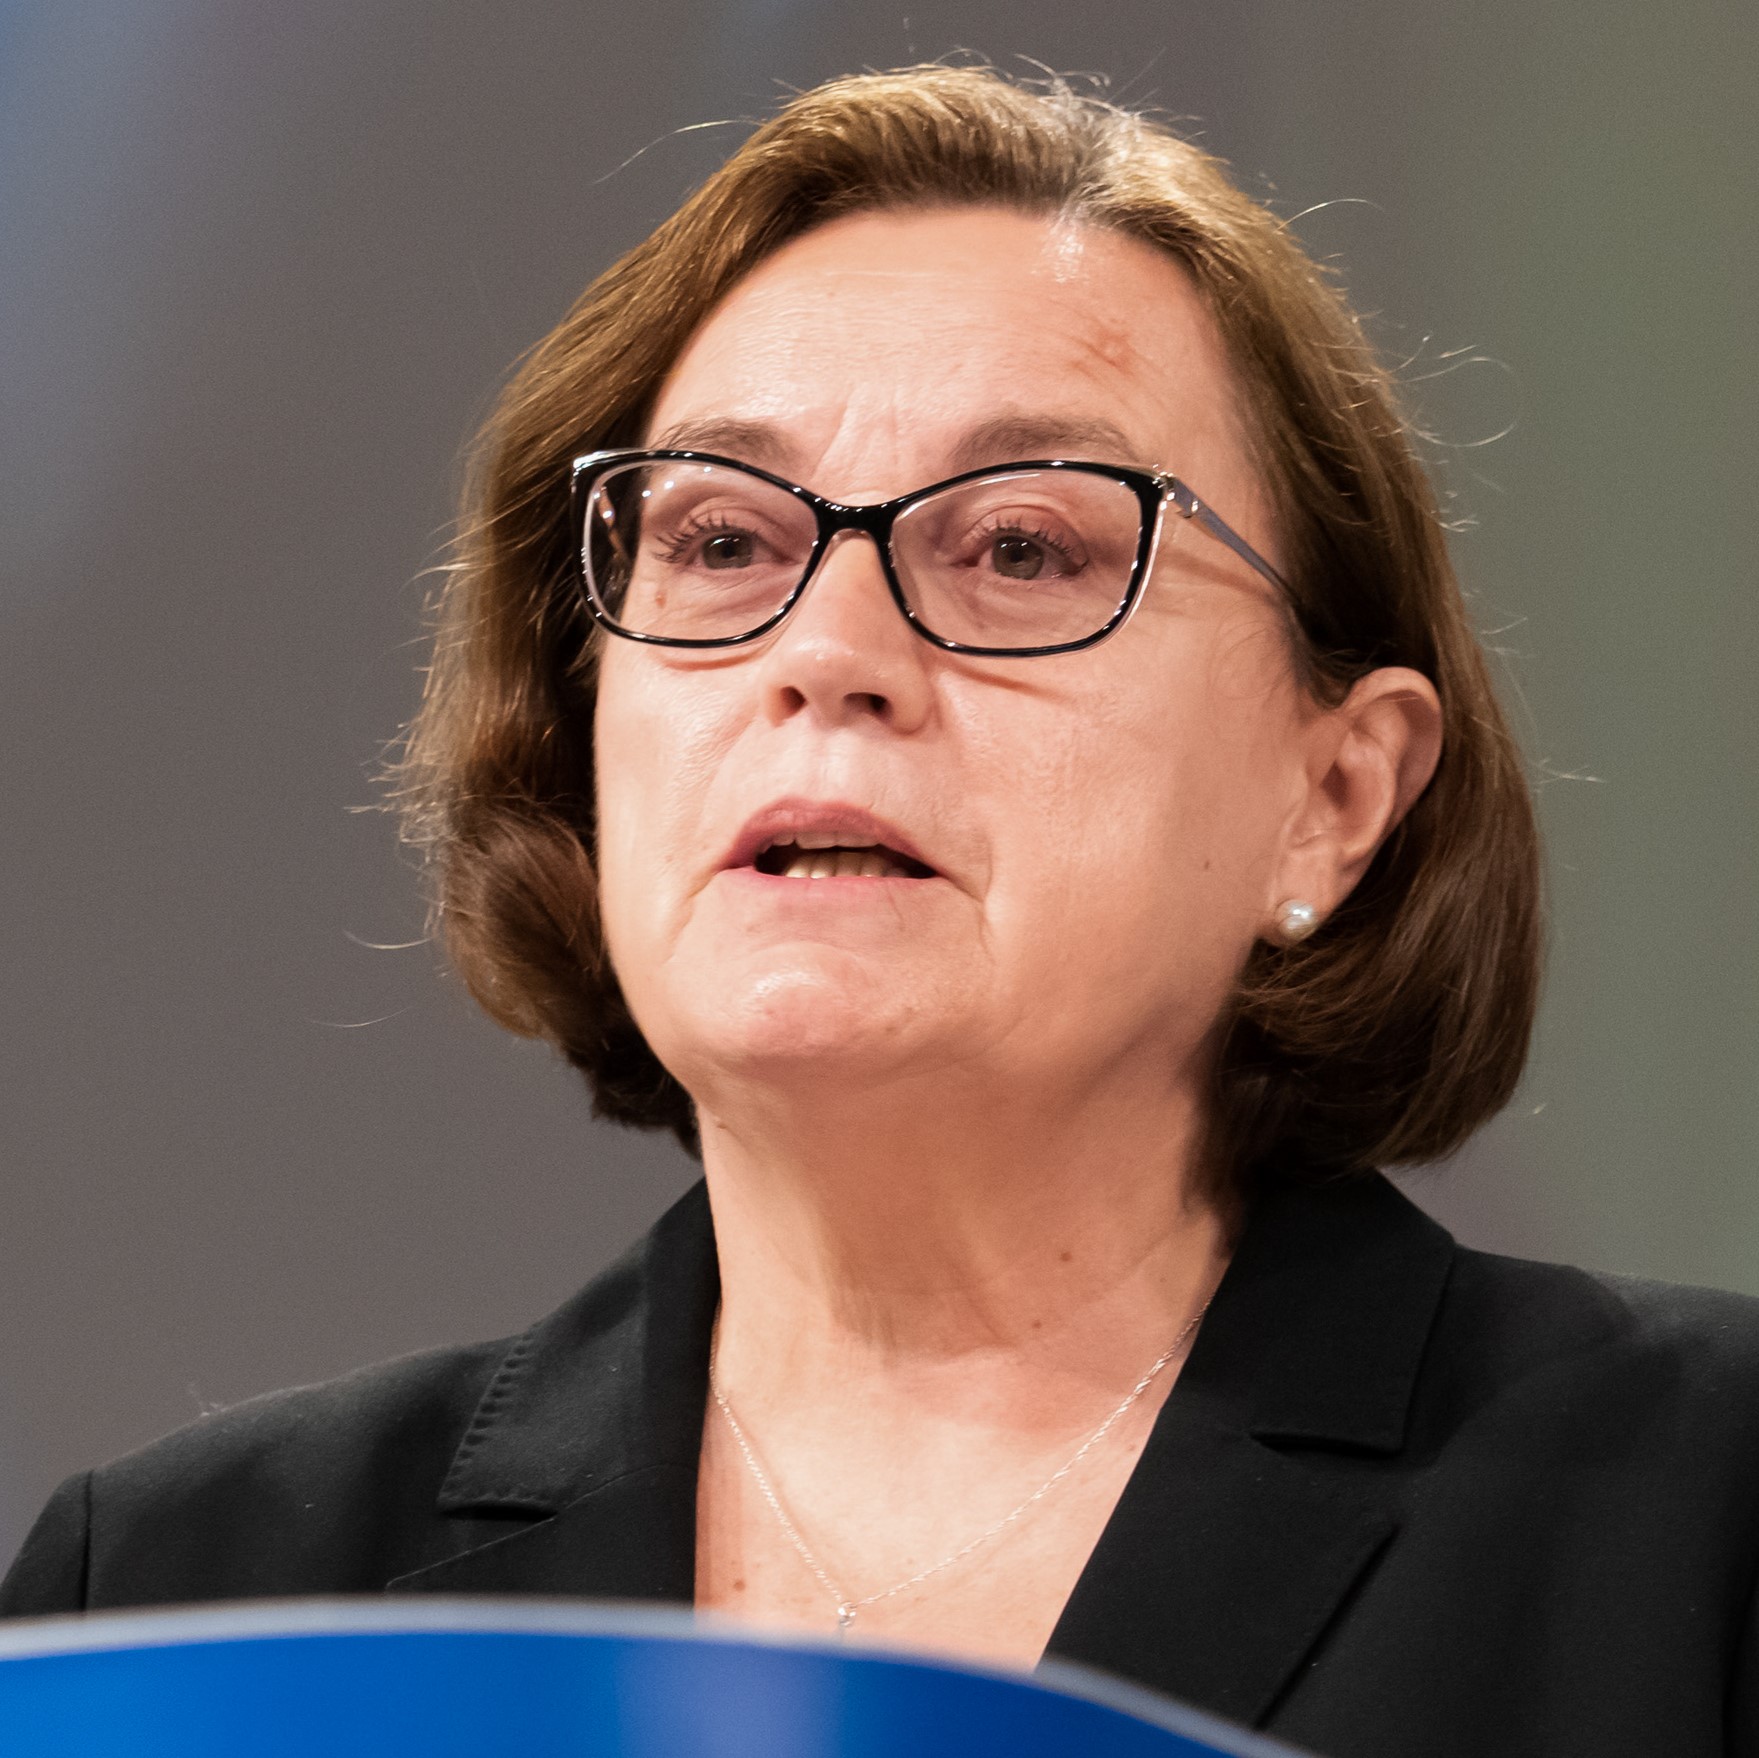 Ana Paula Zacarias, Secretary of State for European Affairs of Portugal